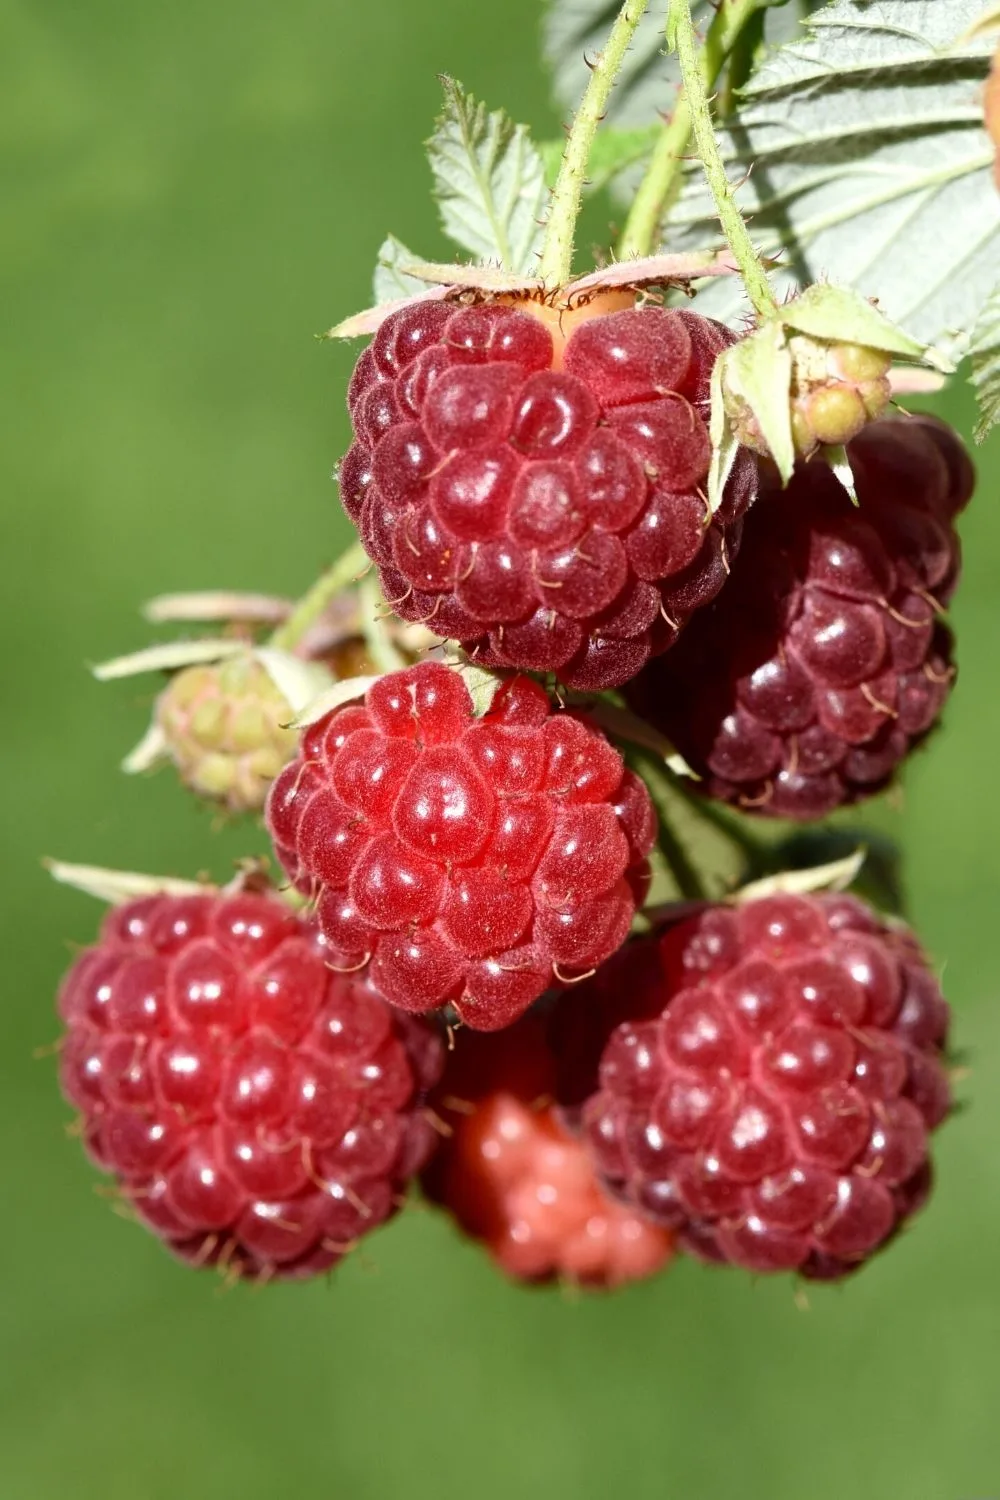 Rubus Idaeus is the European counterpart of the American Raspberry (Rubus Strigosus)